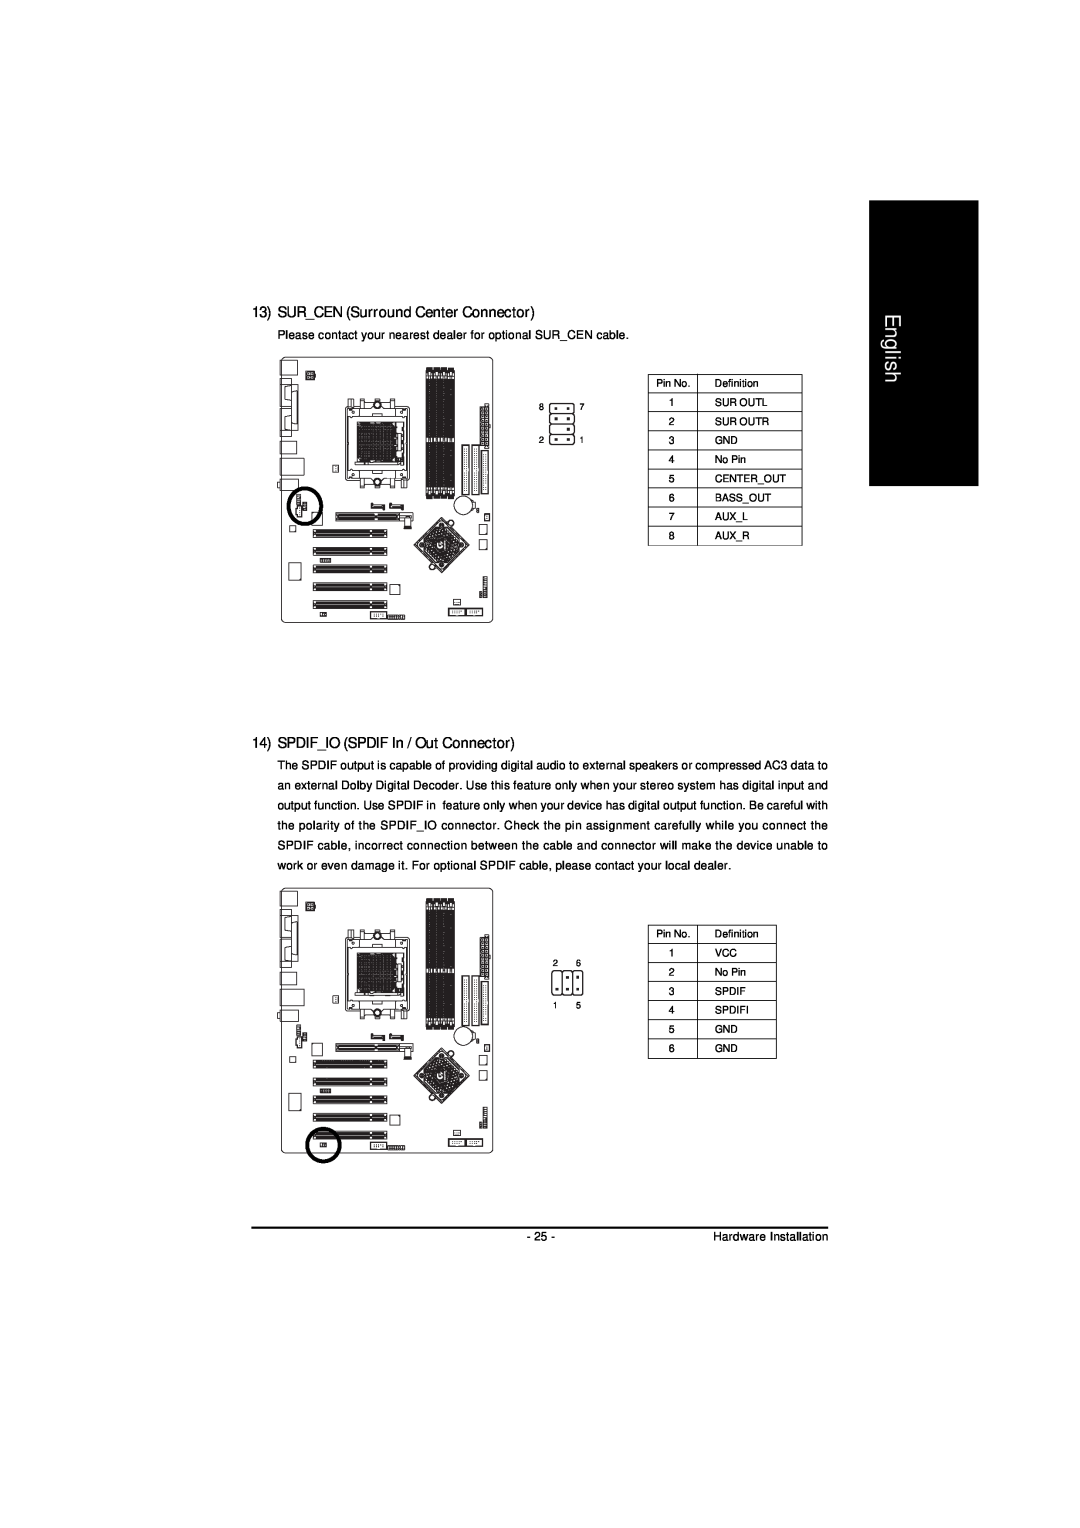 AMD GA-K8NS-939, GA-K8NS PRO-939 user manual SURCEN Surround Center Connector, SPDIFIO SPDIF In / Out Connector, English 